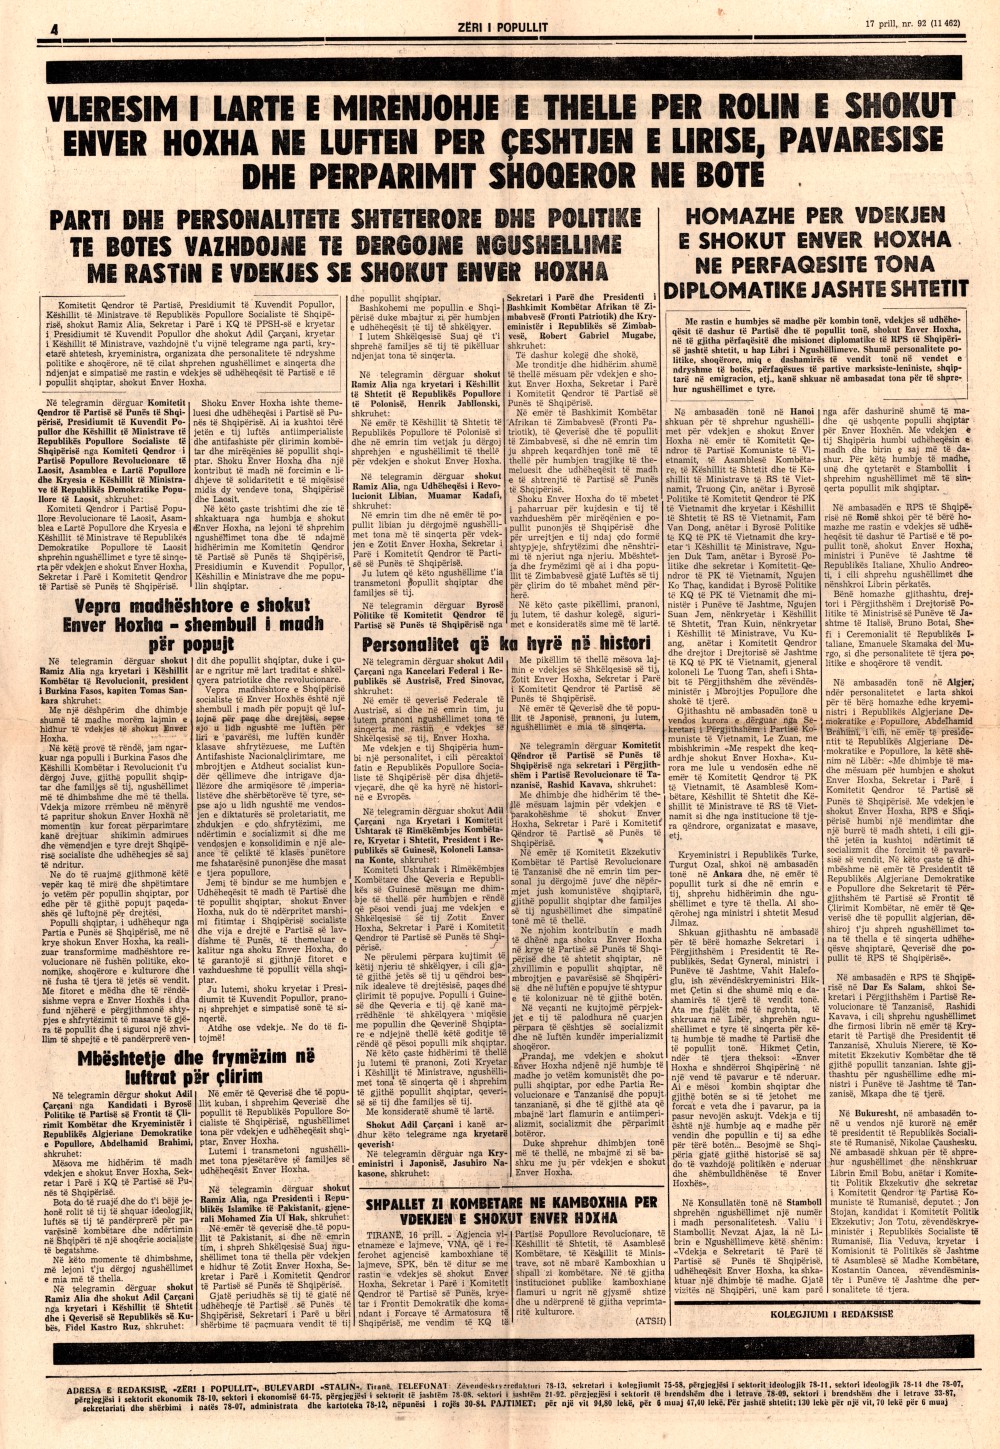 Газета "Зери и популлит" от 17 апреля 1985 года (четвертая полоса)